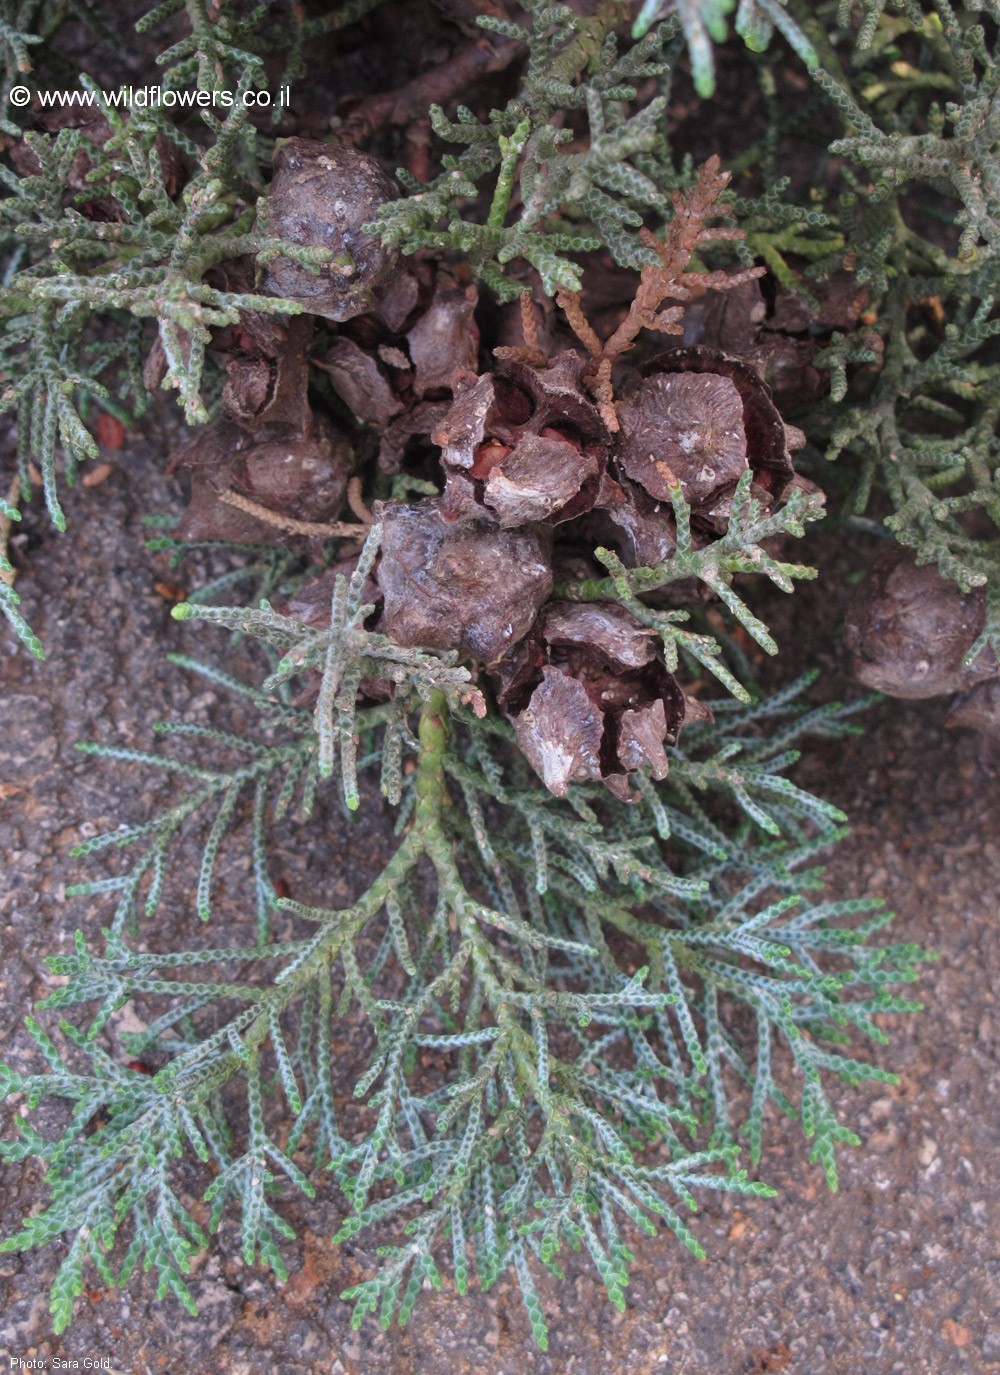 Cupressus arizonica var. glabra